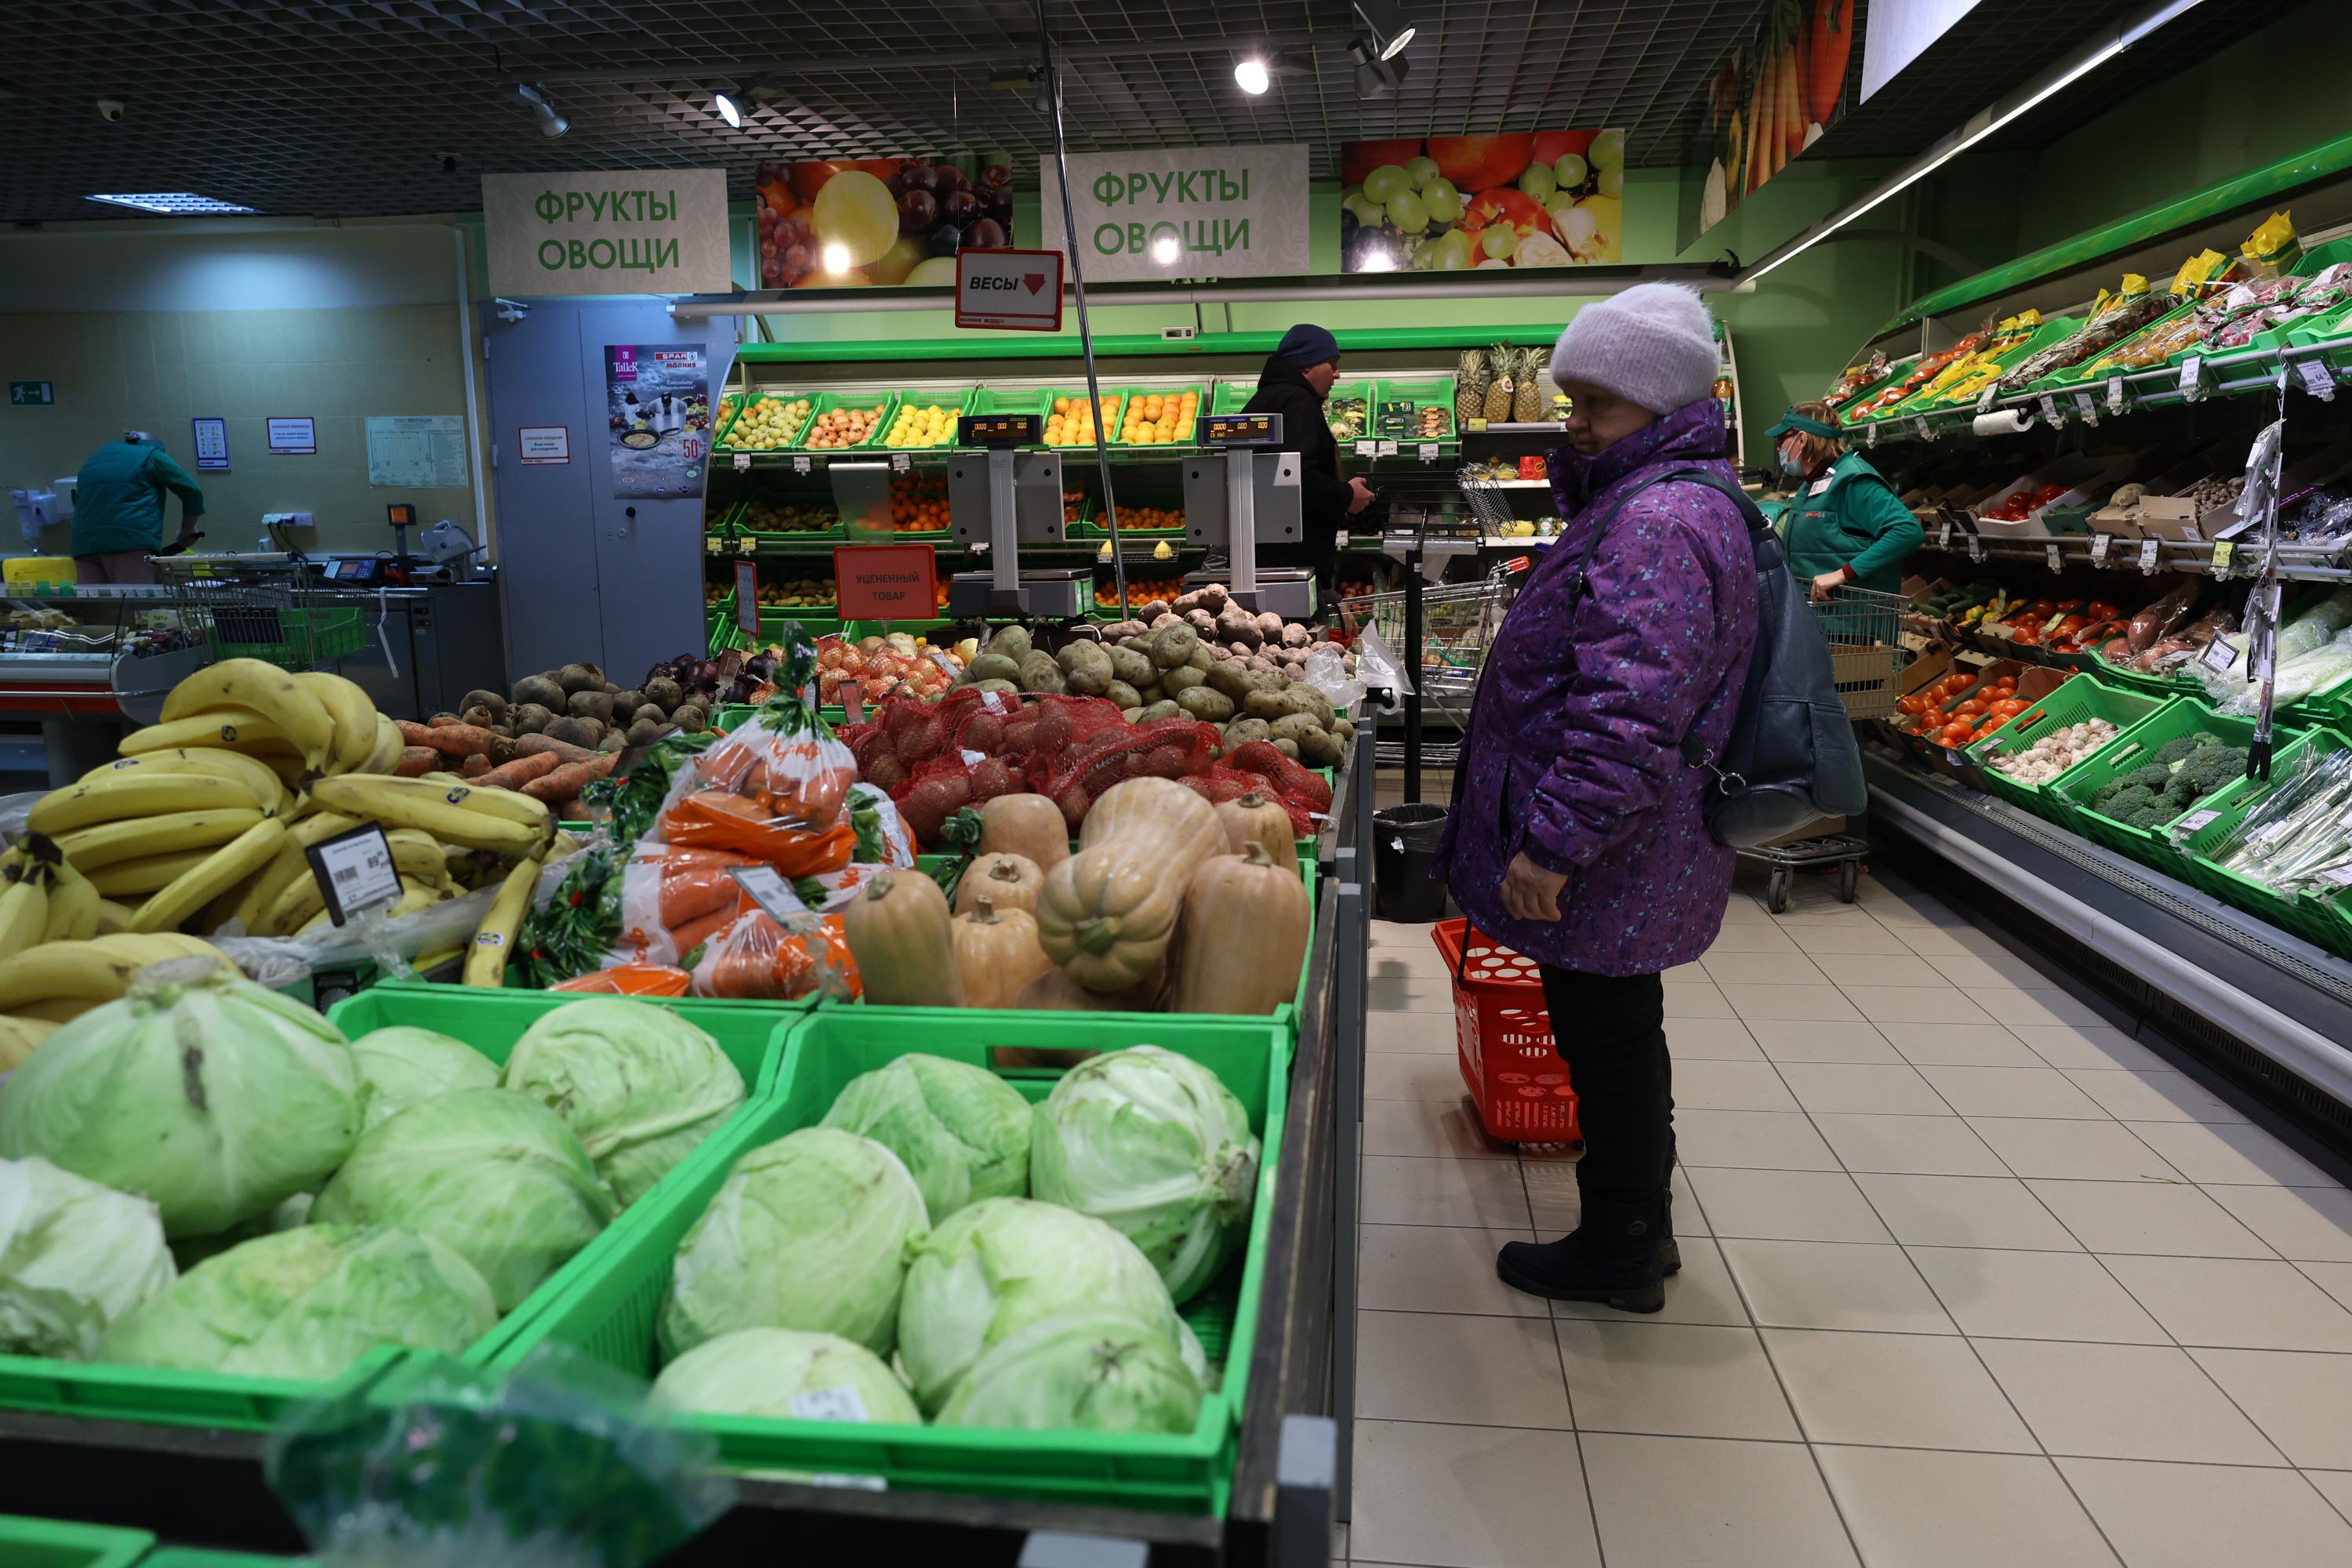 Цена овощей за кг. Капуста в магазине. Рост цен на овощи. Овощной отдел в магазине капуста. Овощной рынок фото российский.